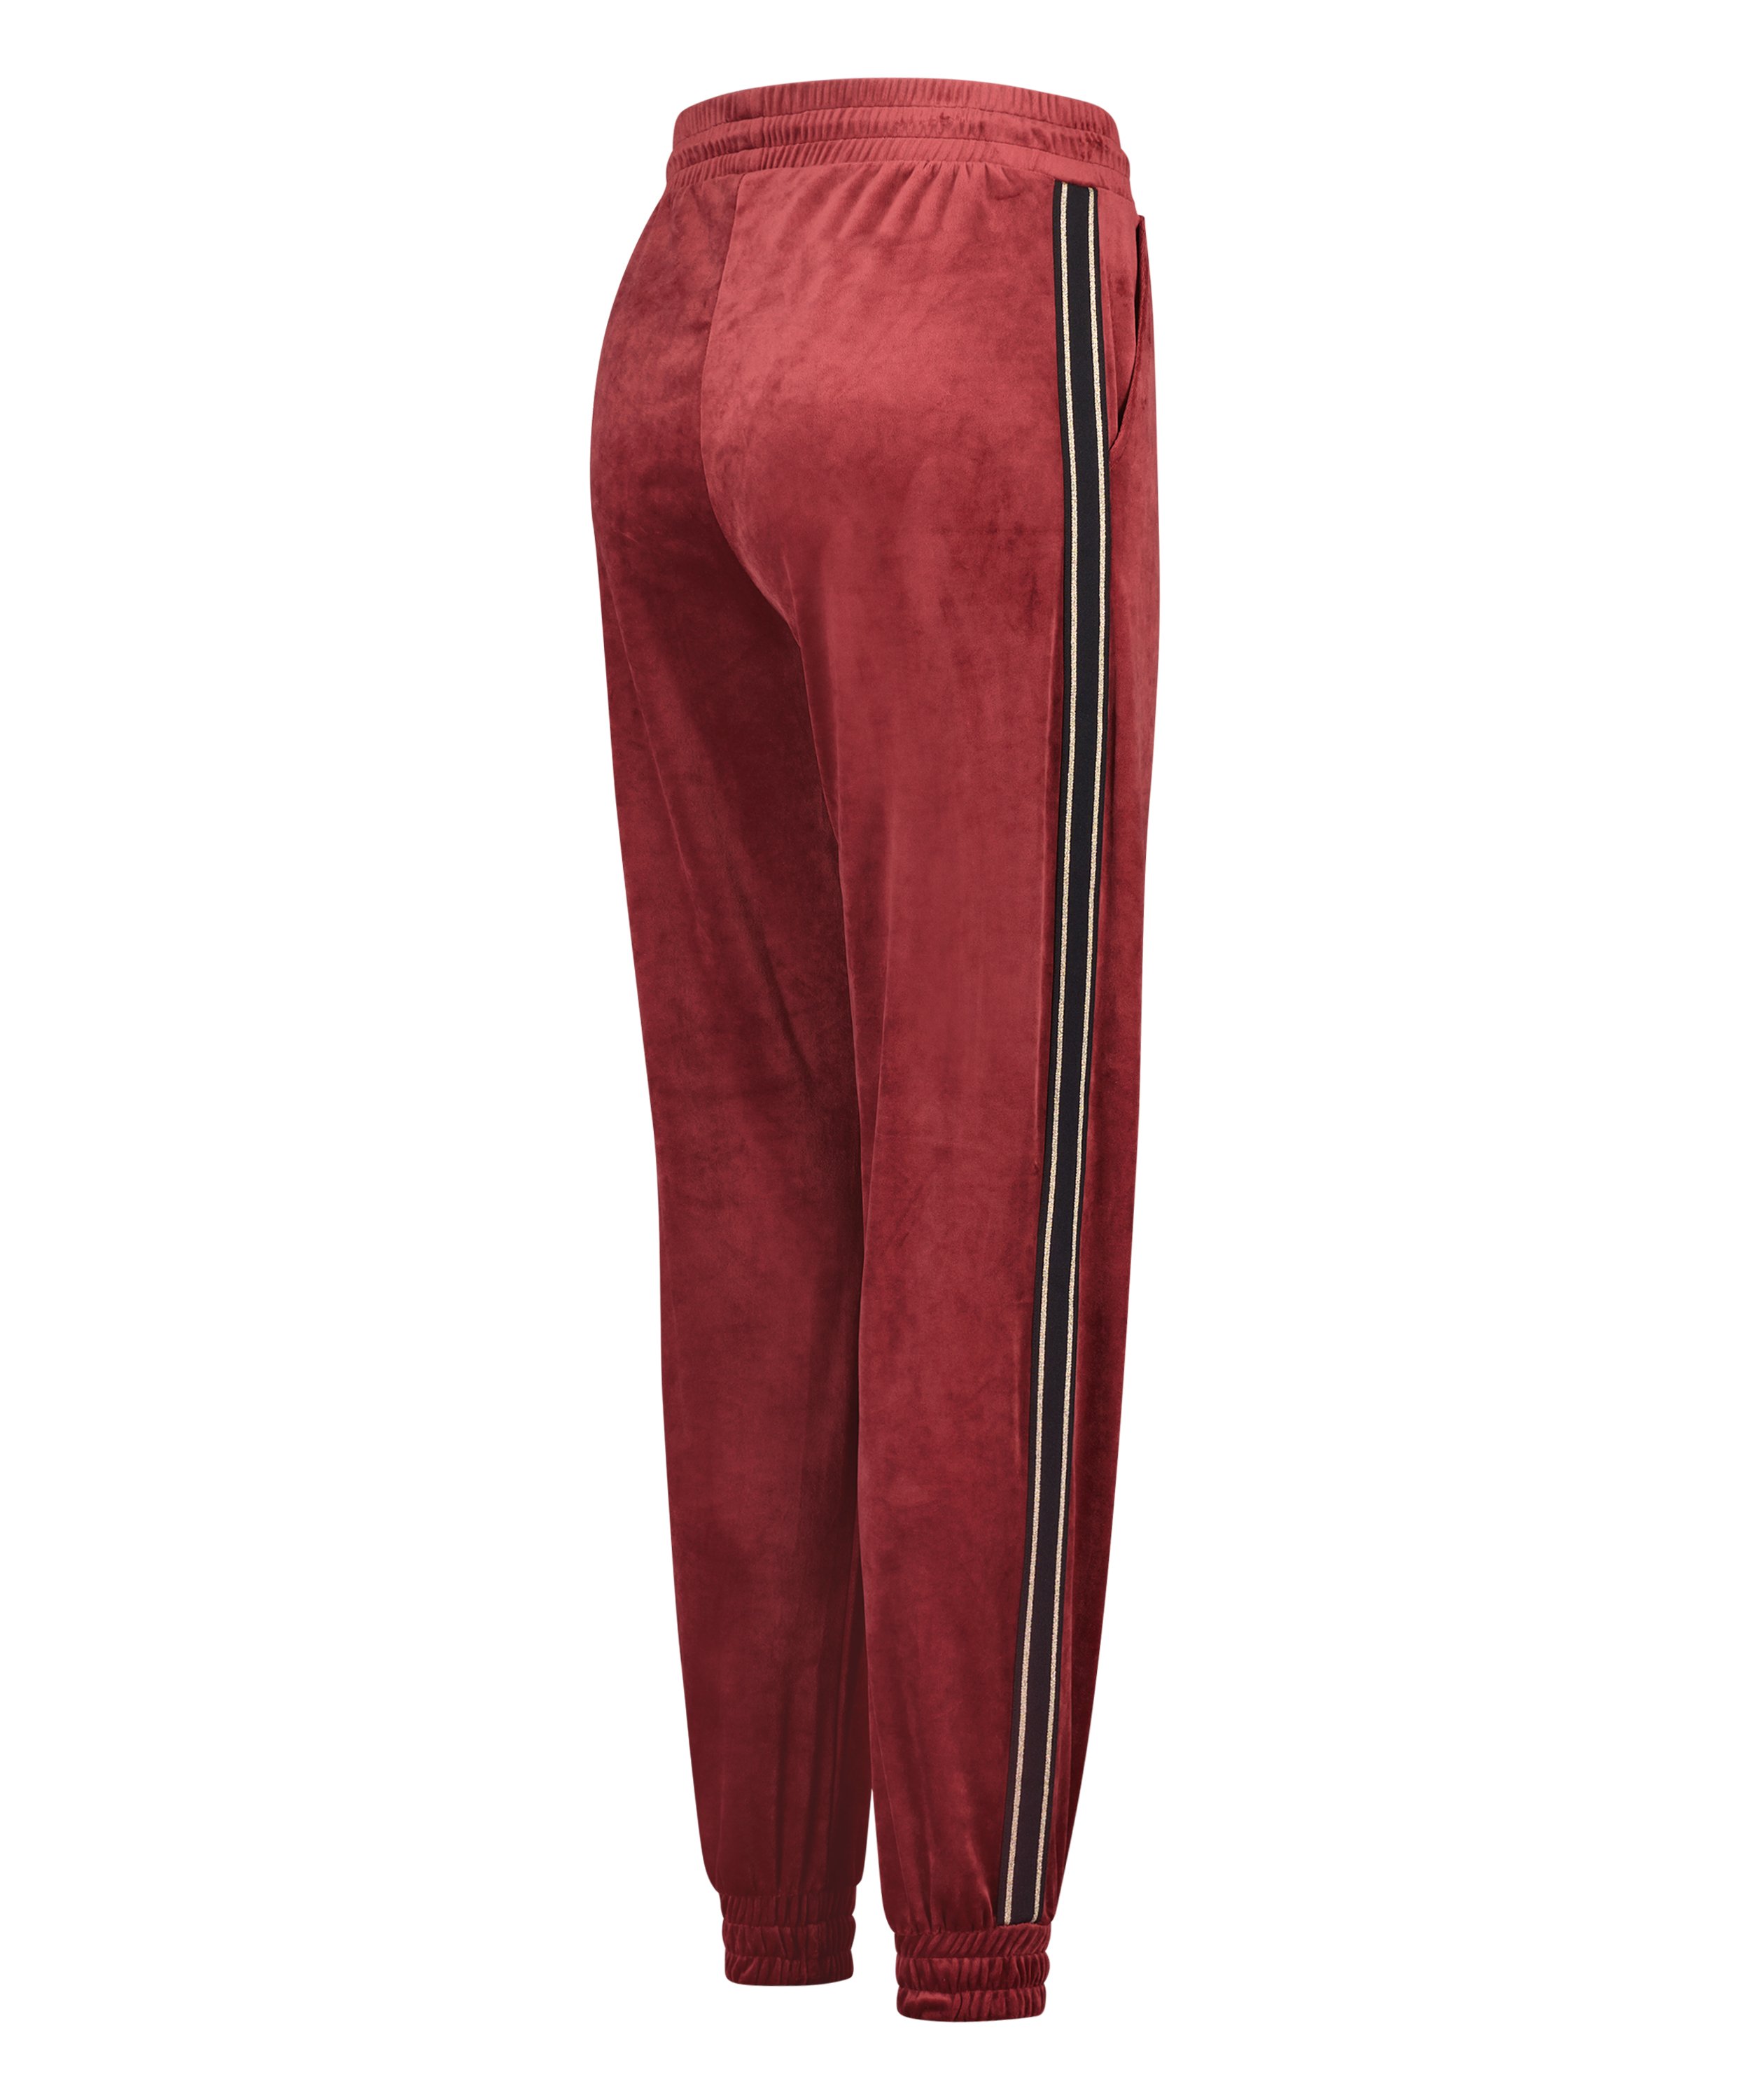 HKMX Sport pants Velours, Red, main